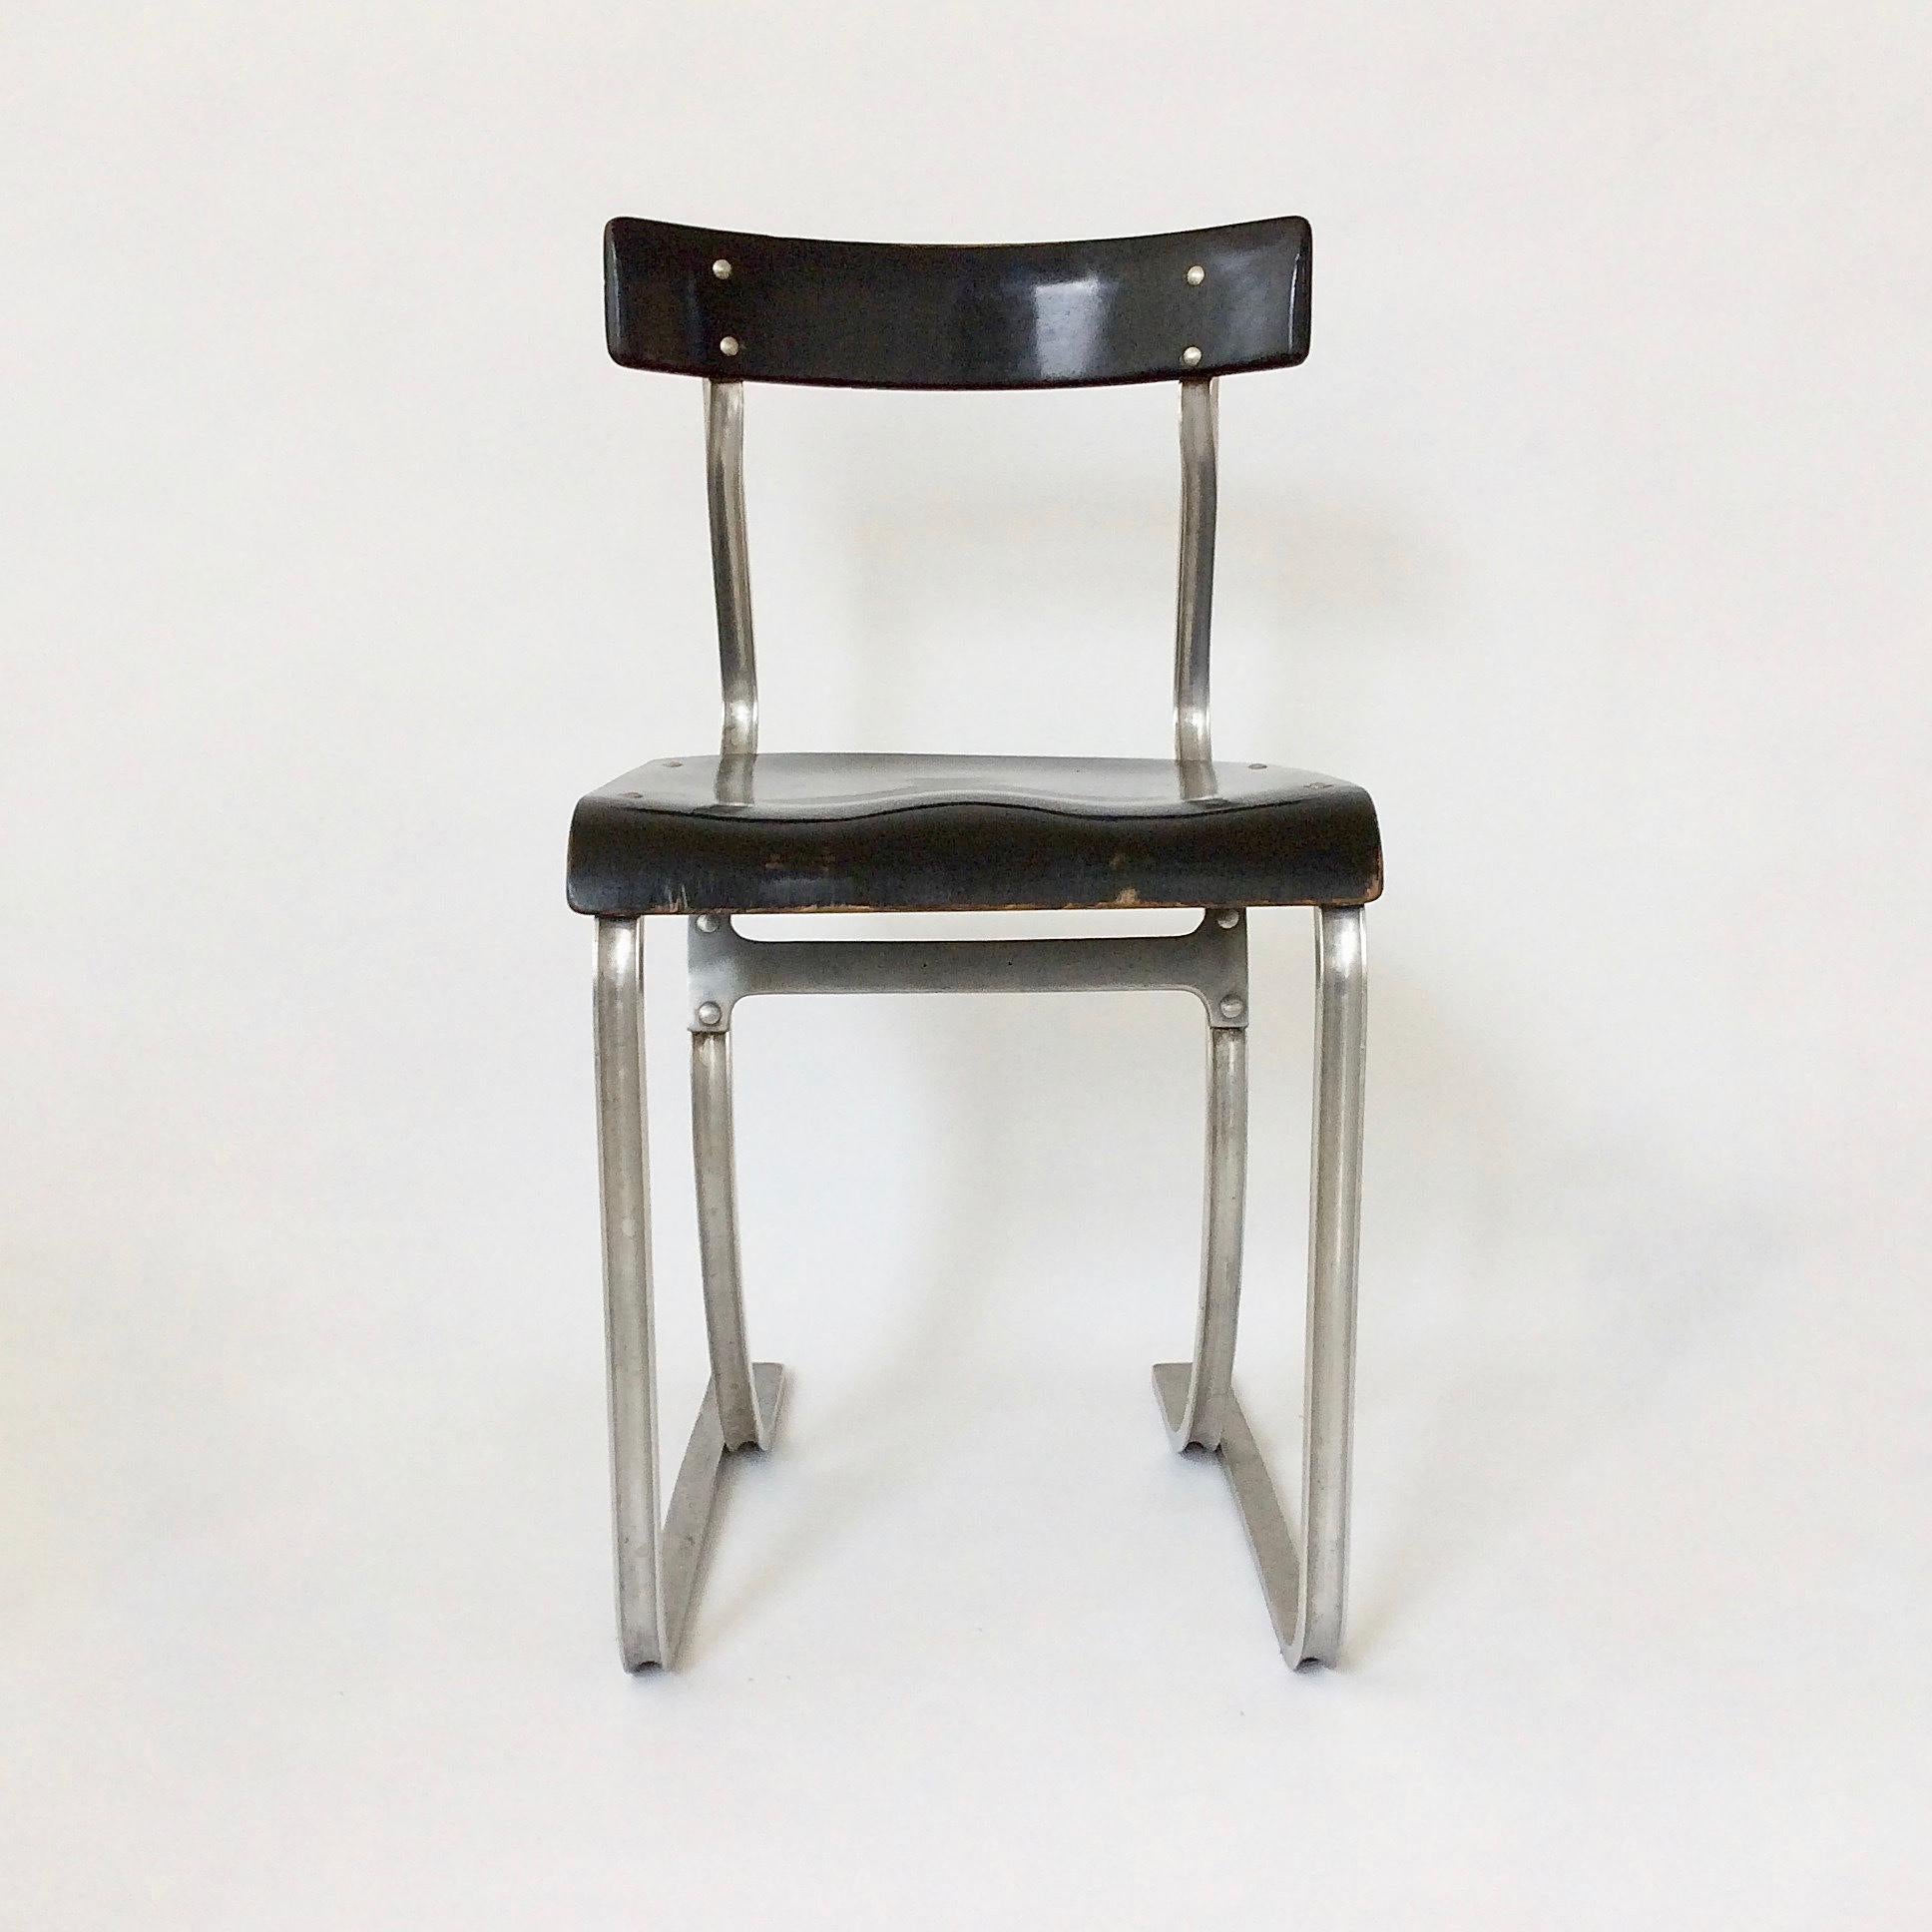 Swiss Marcel Breuer Rare Aluminium Chair, circa 1932